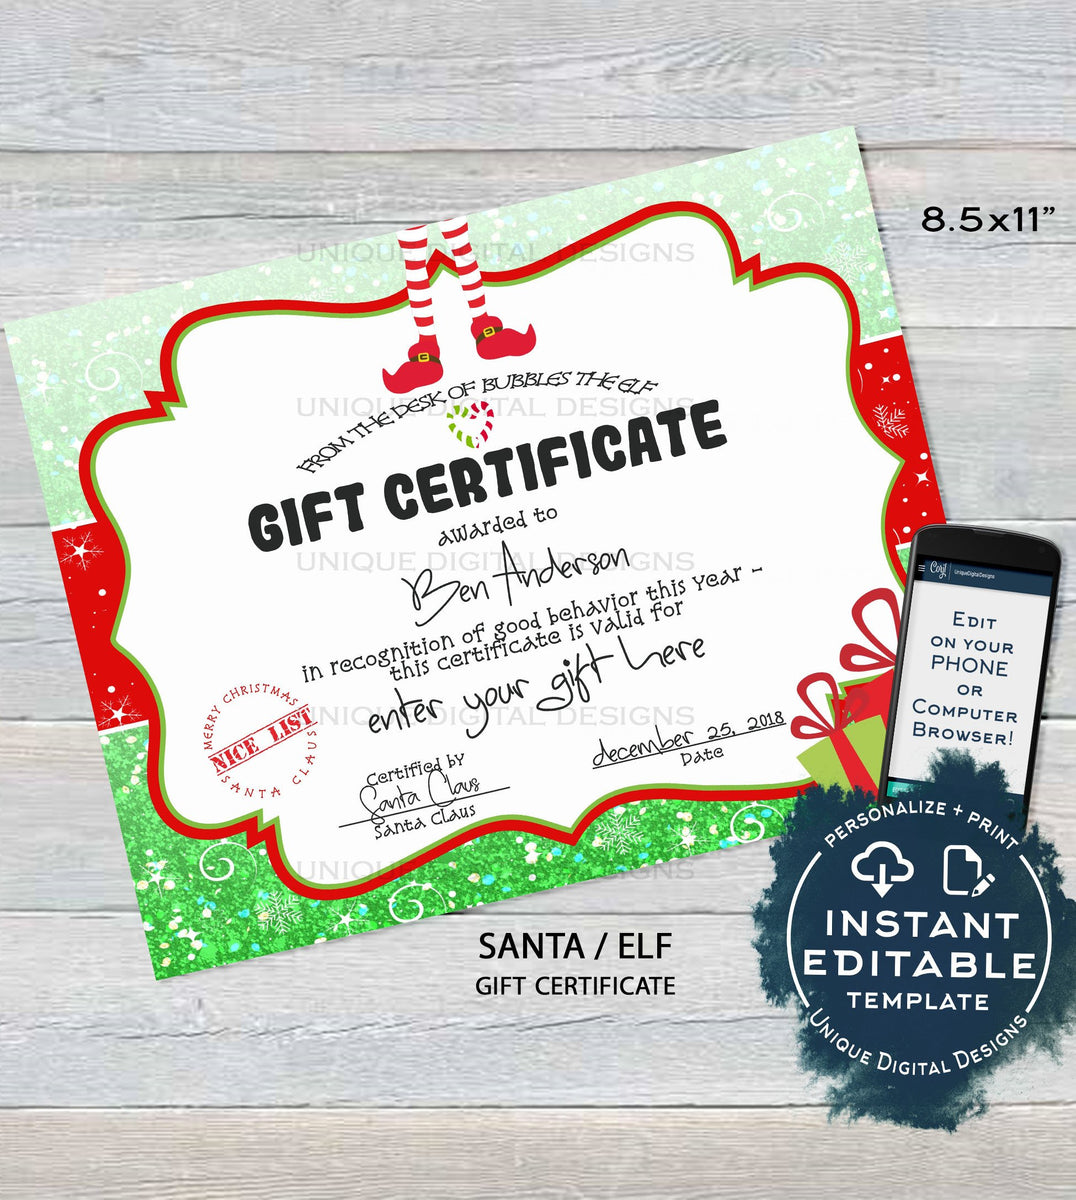 gift-certificate-editable-gift-certificate-from-santa-custom-santa